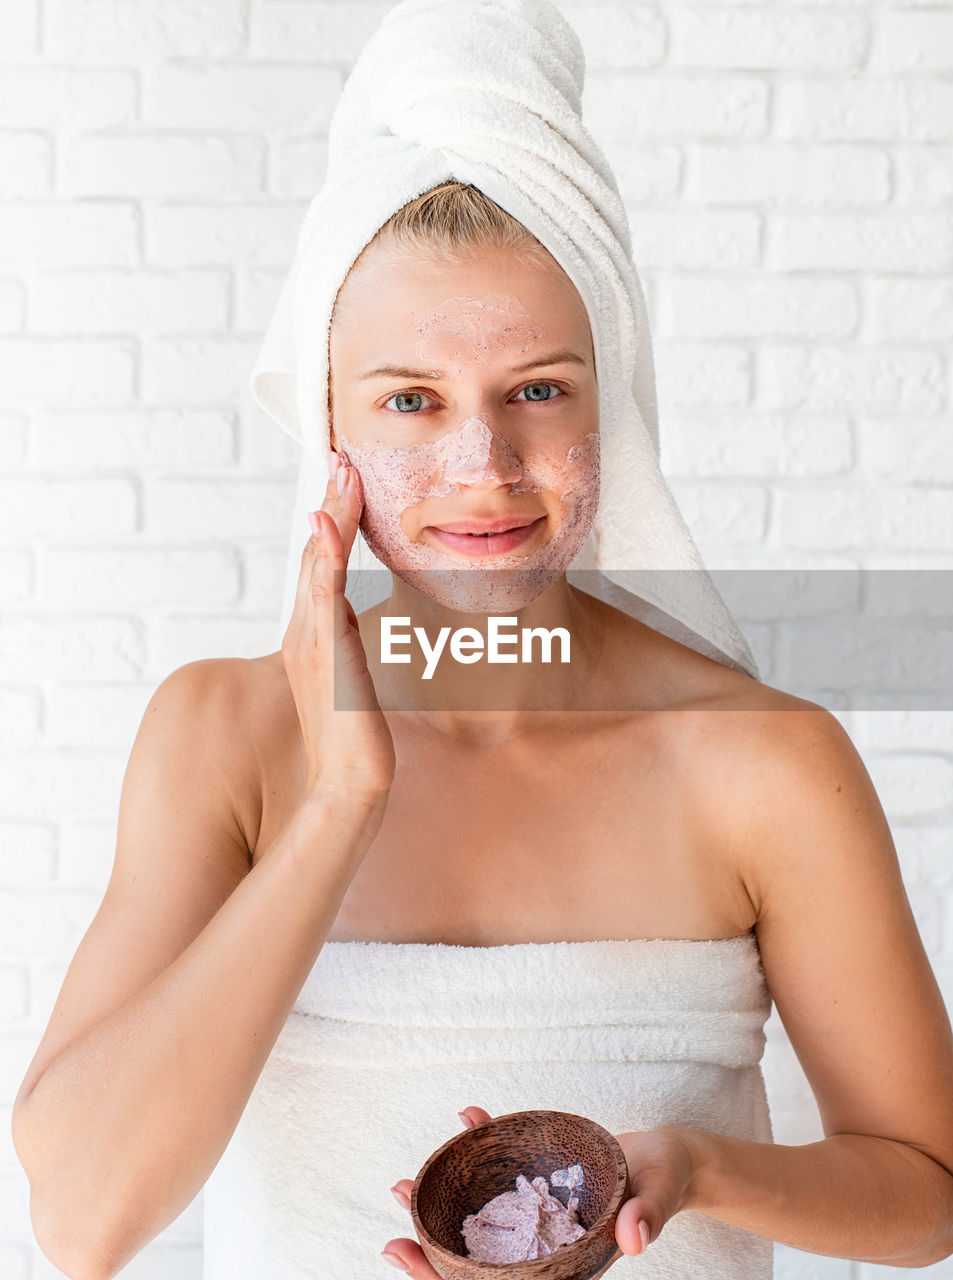 Woman wearing white bath towels on head doing spa procedures applying facial scrub